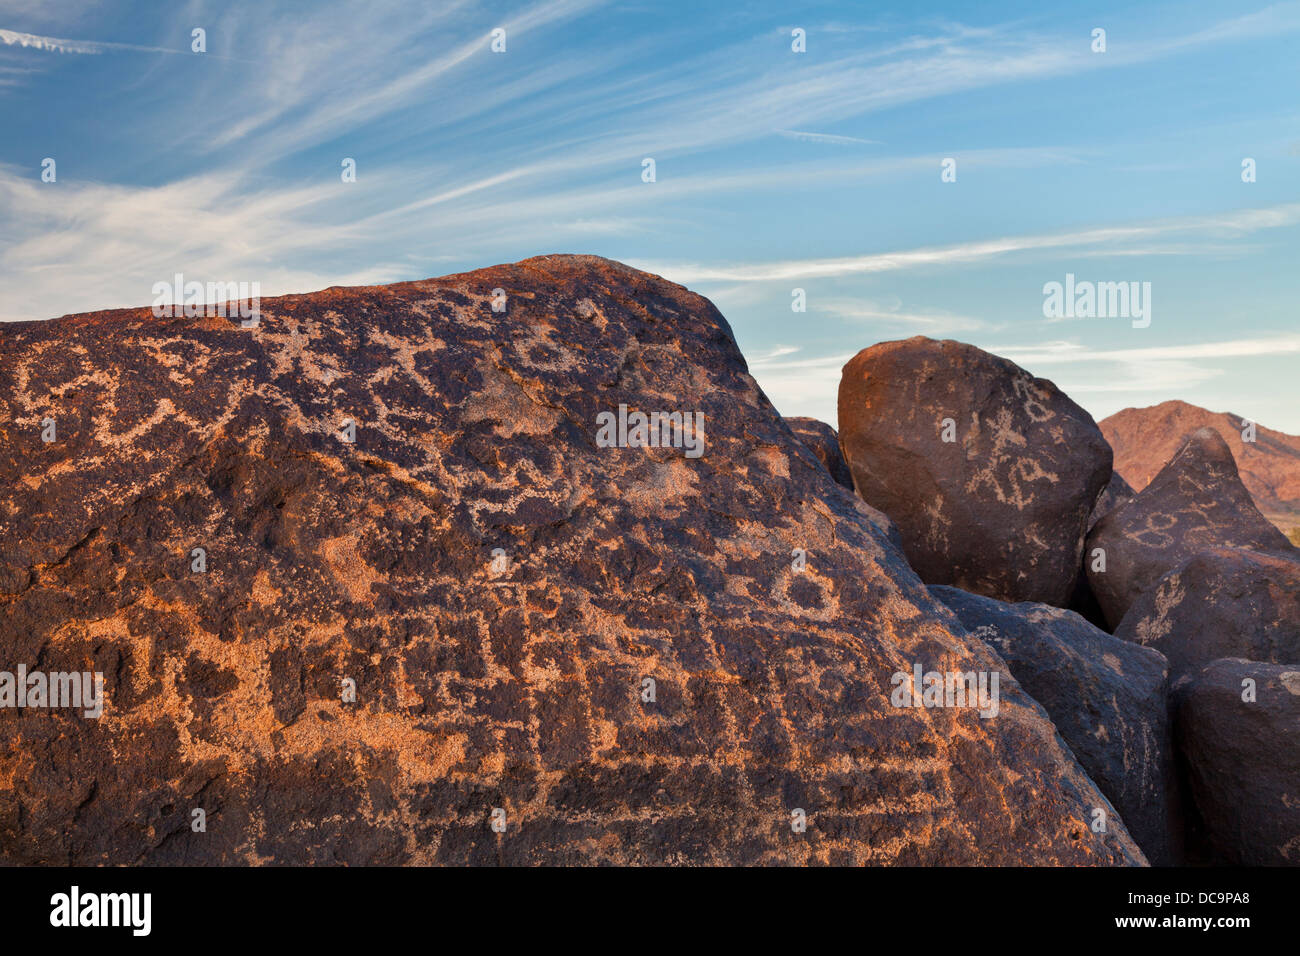 USA, Arizona, Gila Bend. Close-up of prehistoric petroglyphs on boulders. Stock Photo